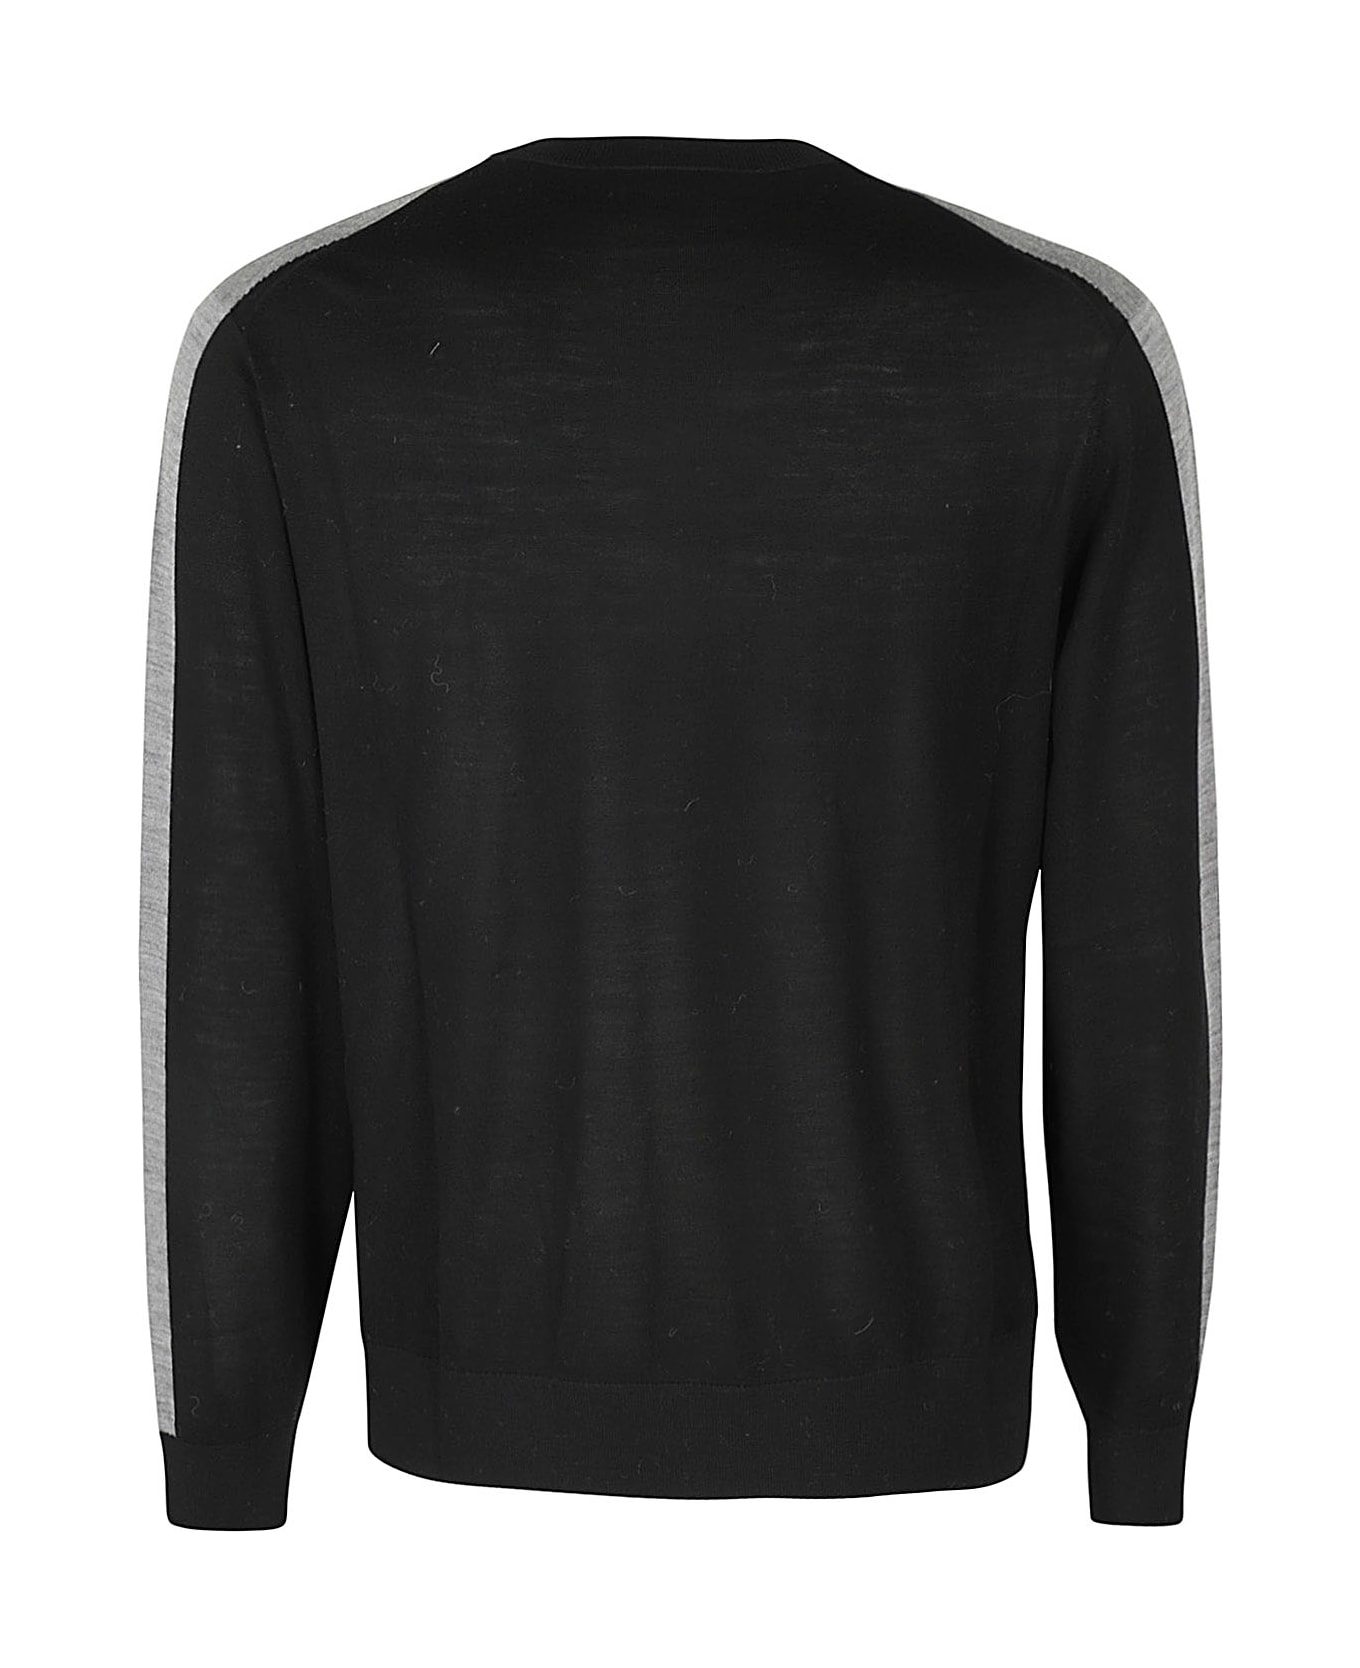 Neil Barrett Modernist Wool Light Sweater - Blacks